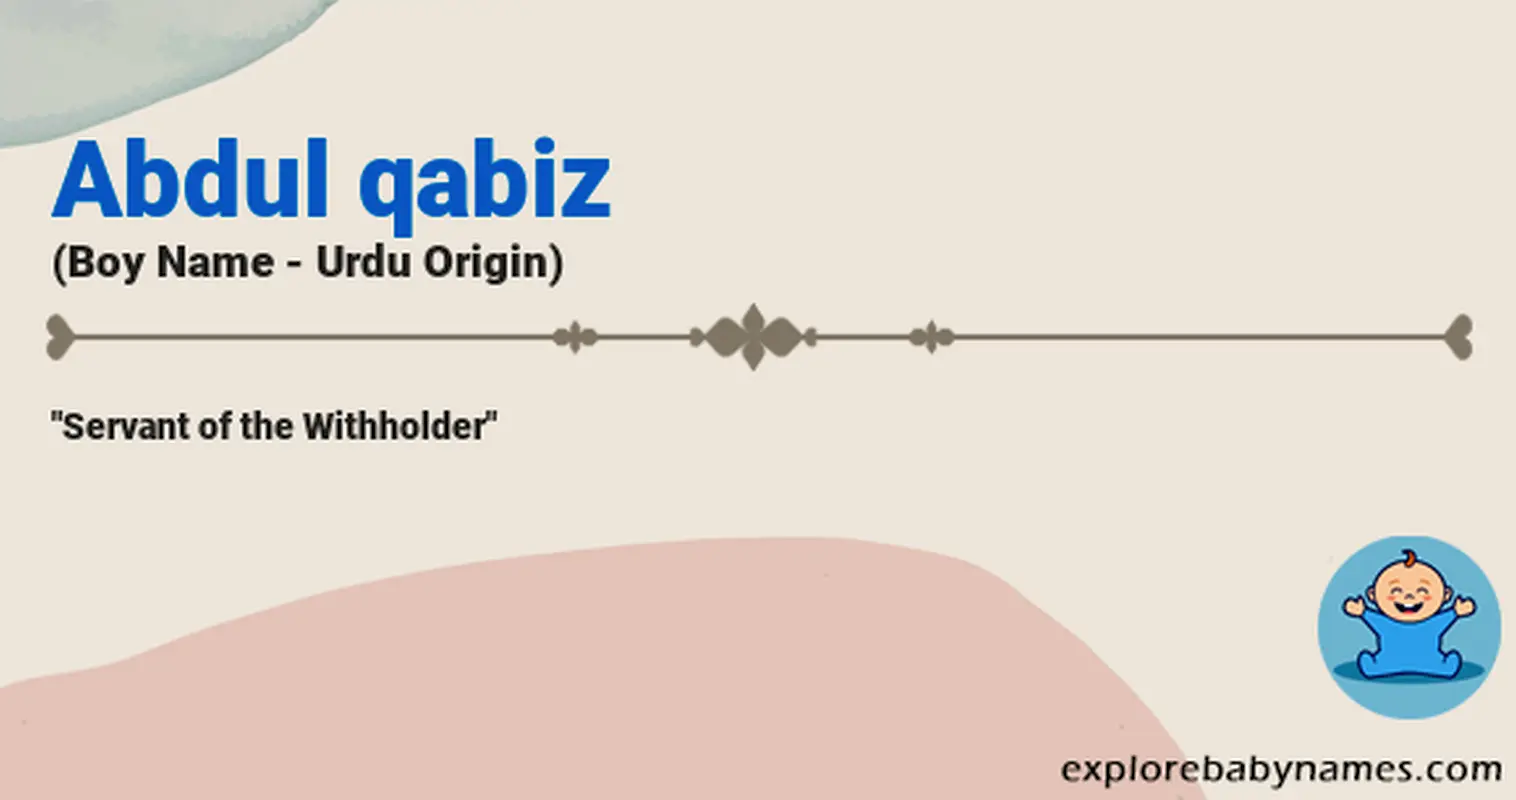 Meaning of Abdul qabiz